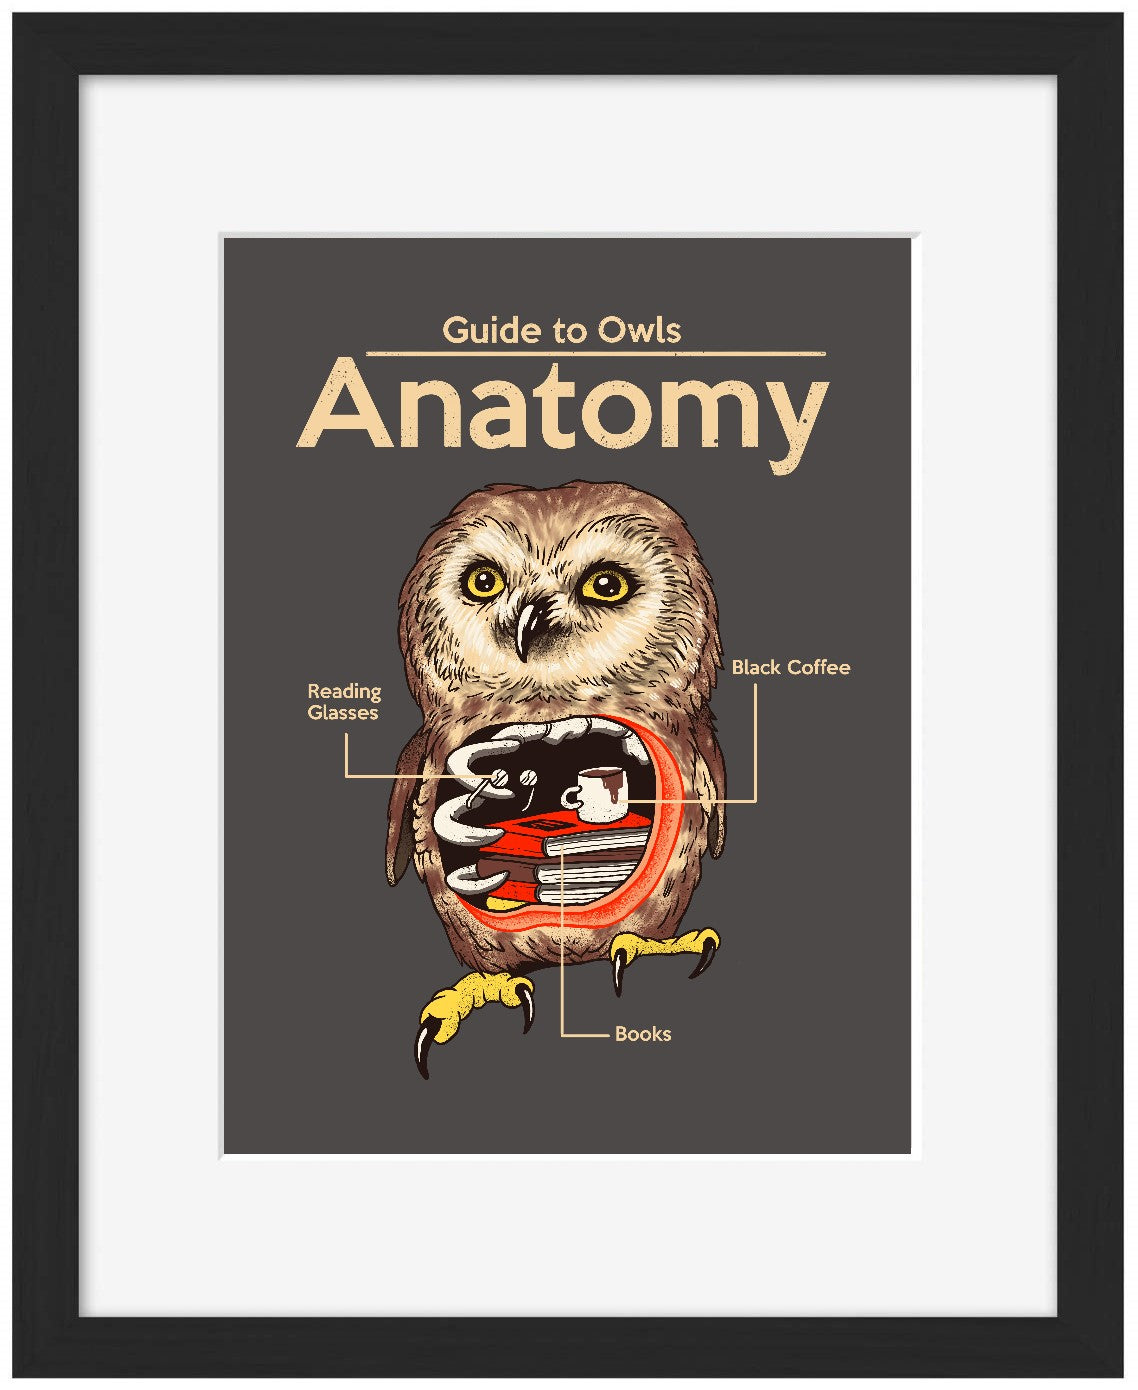 Anatomy of Owls-print, vincent-trinidad-Framed Print-30 x 40 cm-BLUE SHAKER